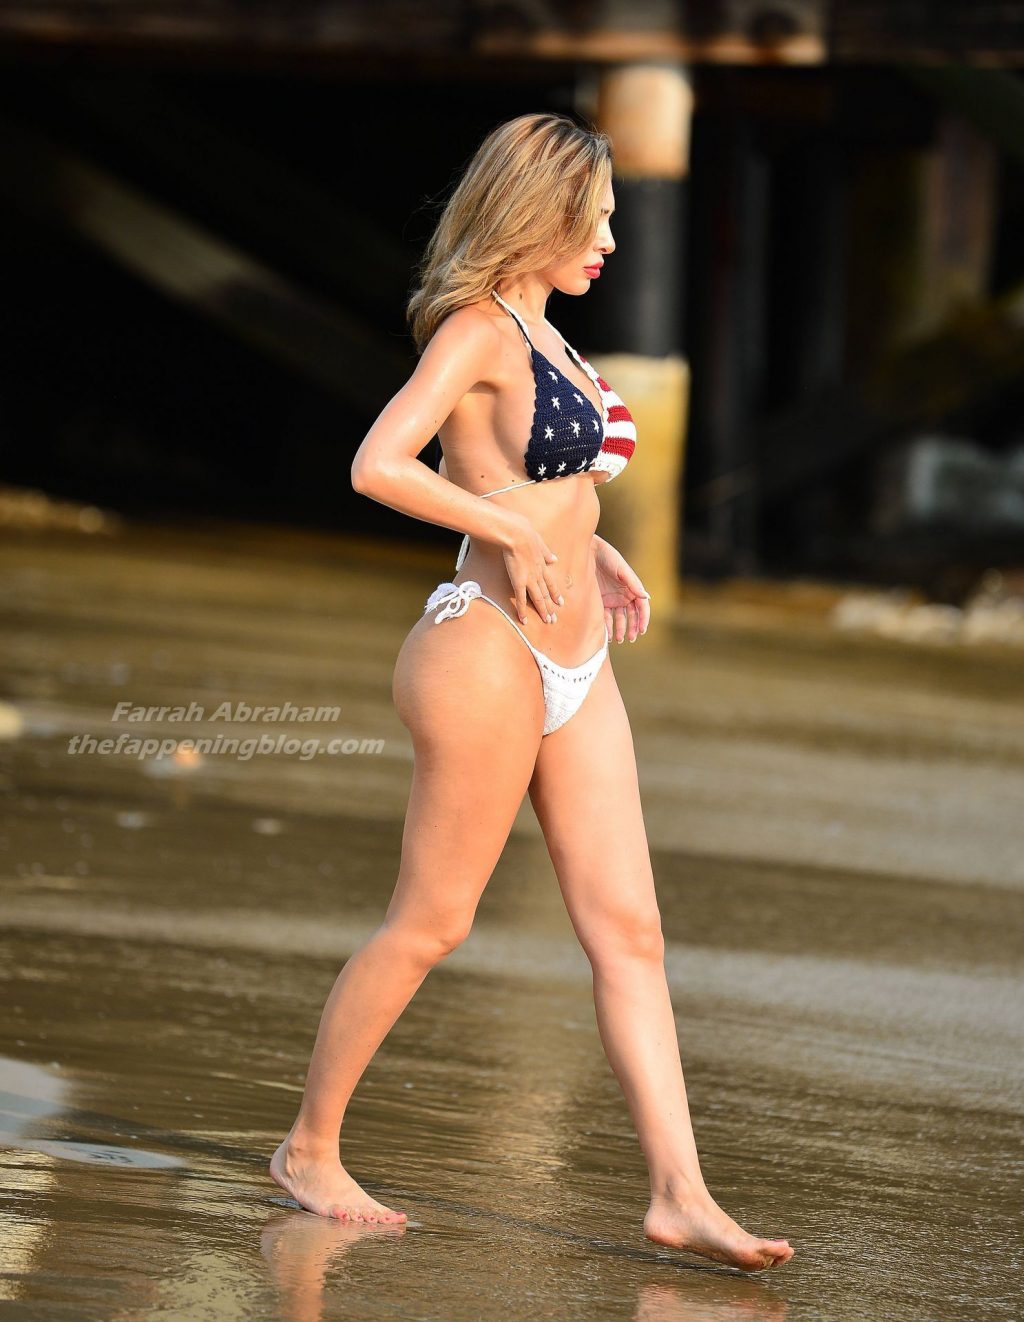 Farrah Abraham Shows Off Her Amazing Body in a Skimpy Patriotic Bikini (45 Photos)